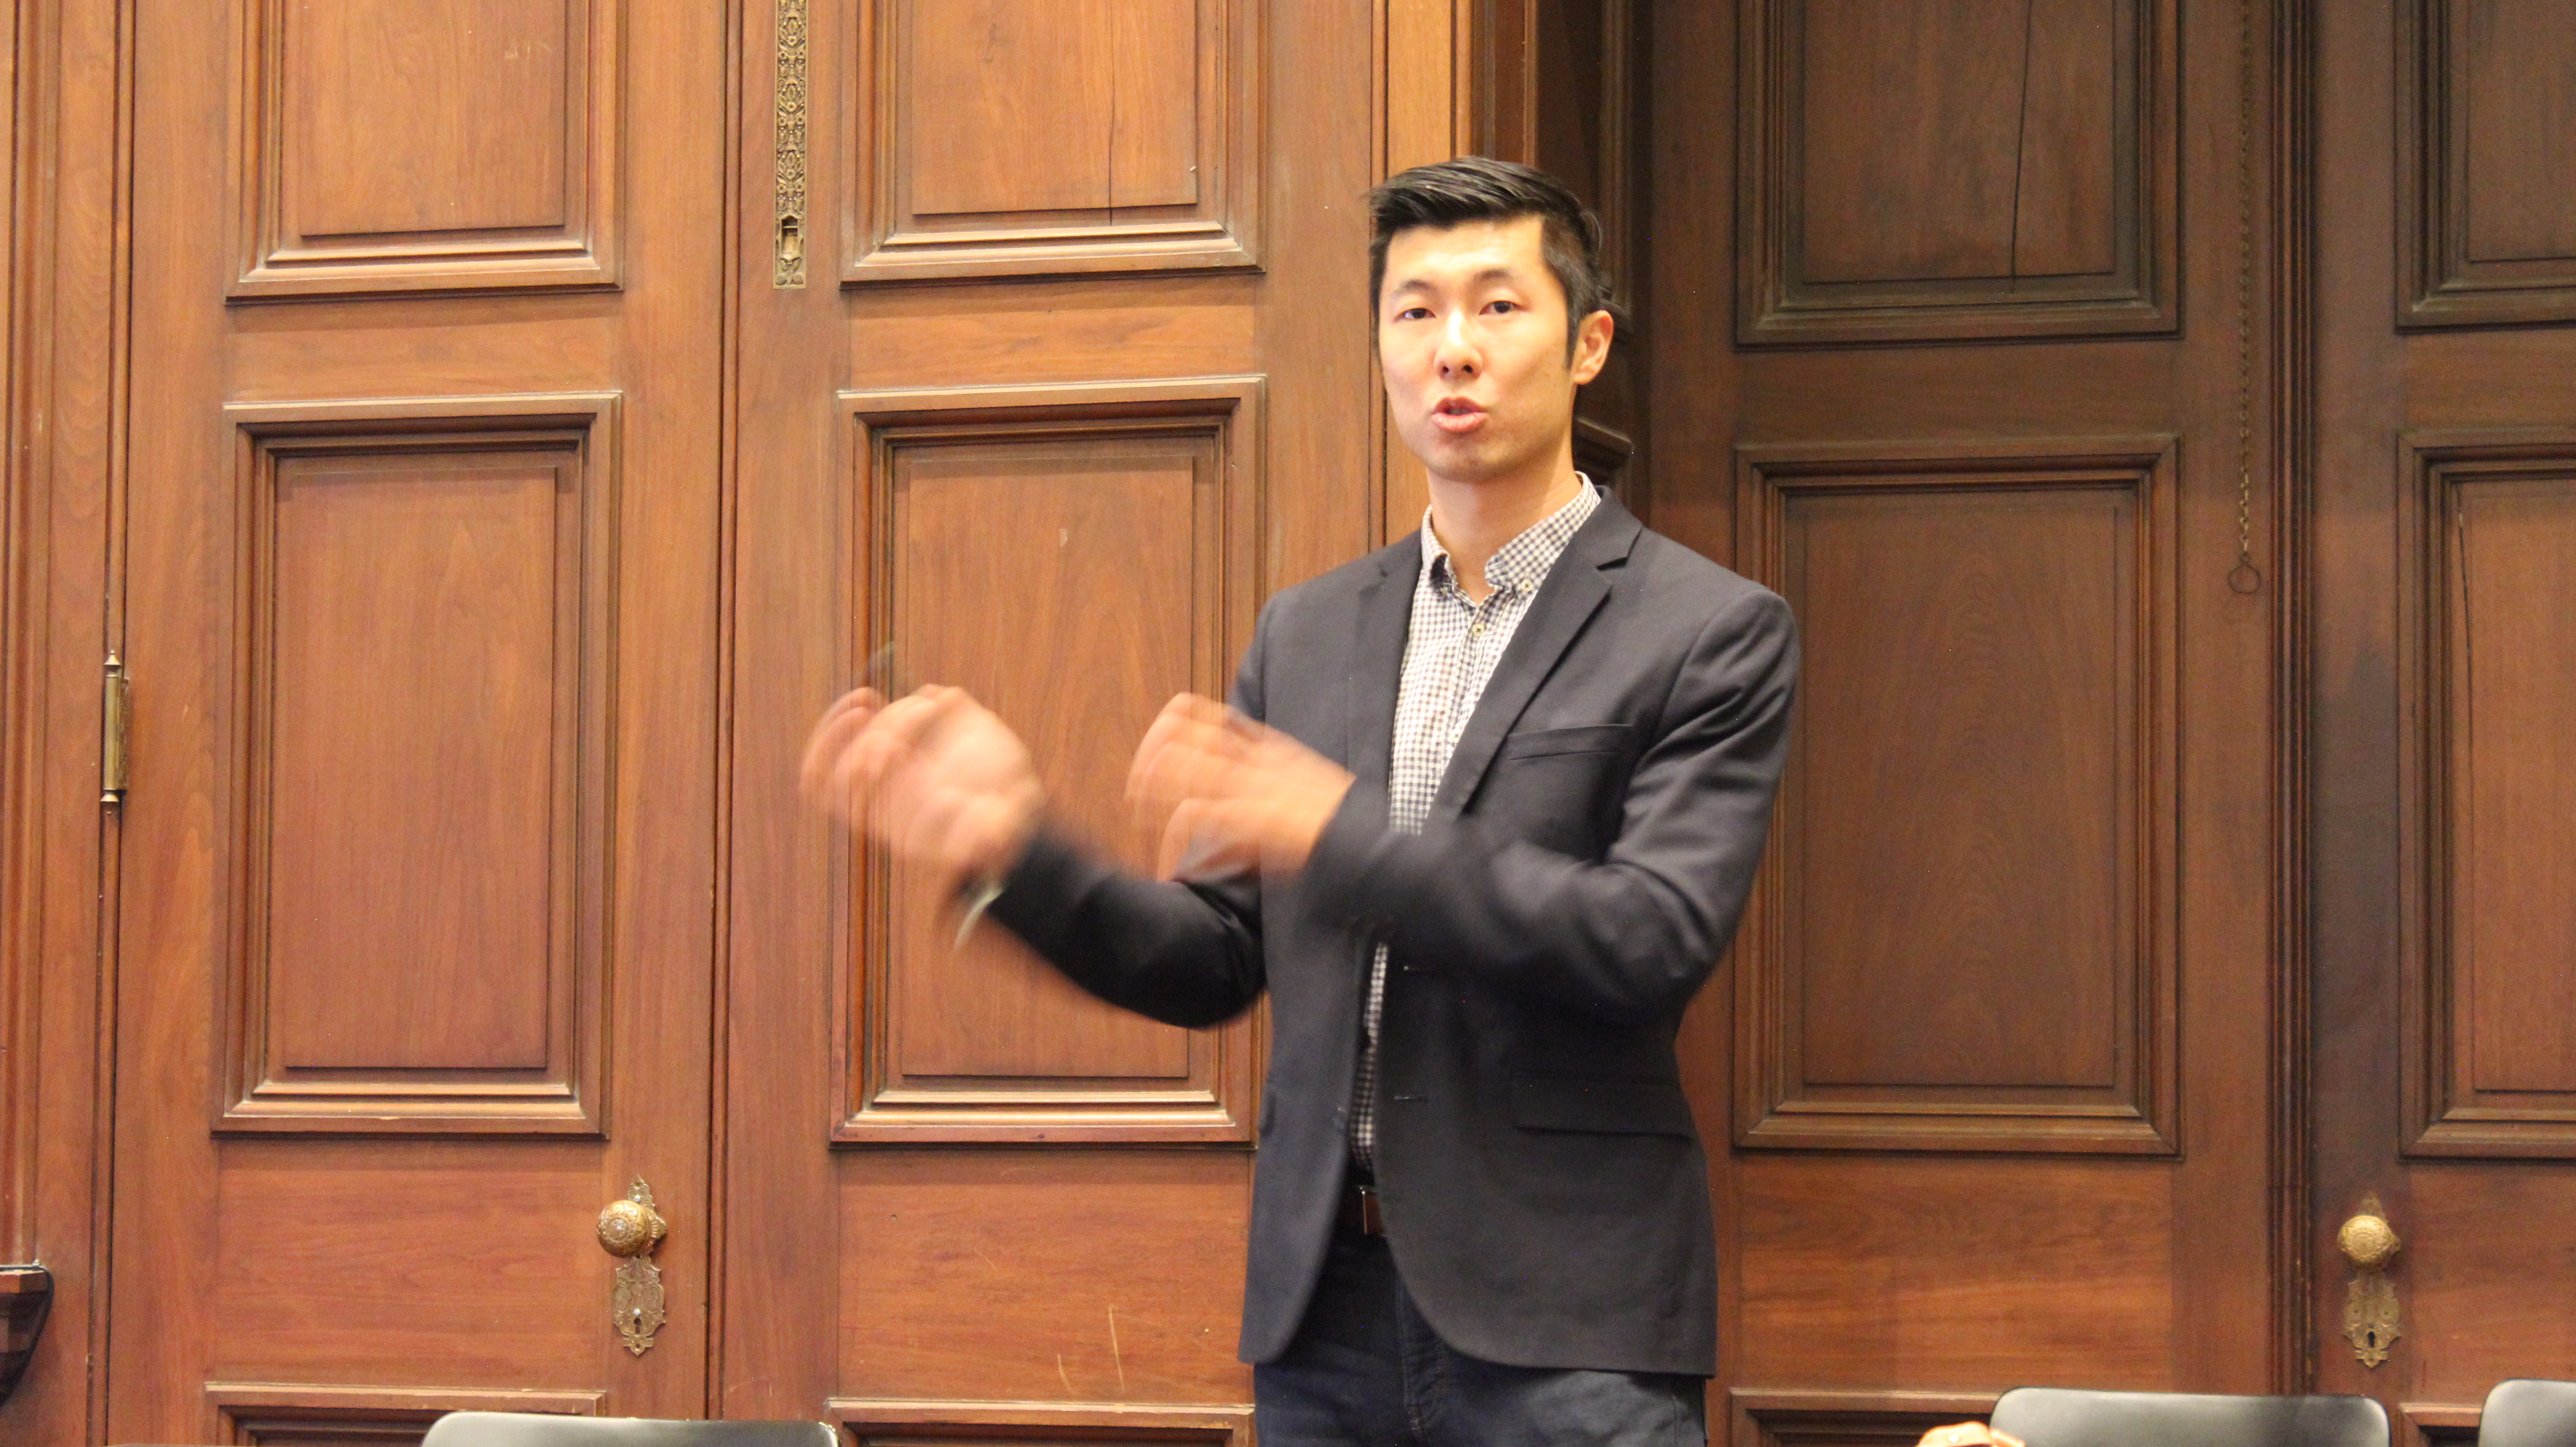 Dan Wu facilitating discussion